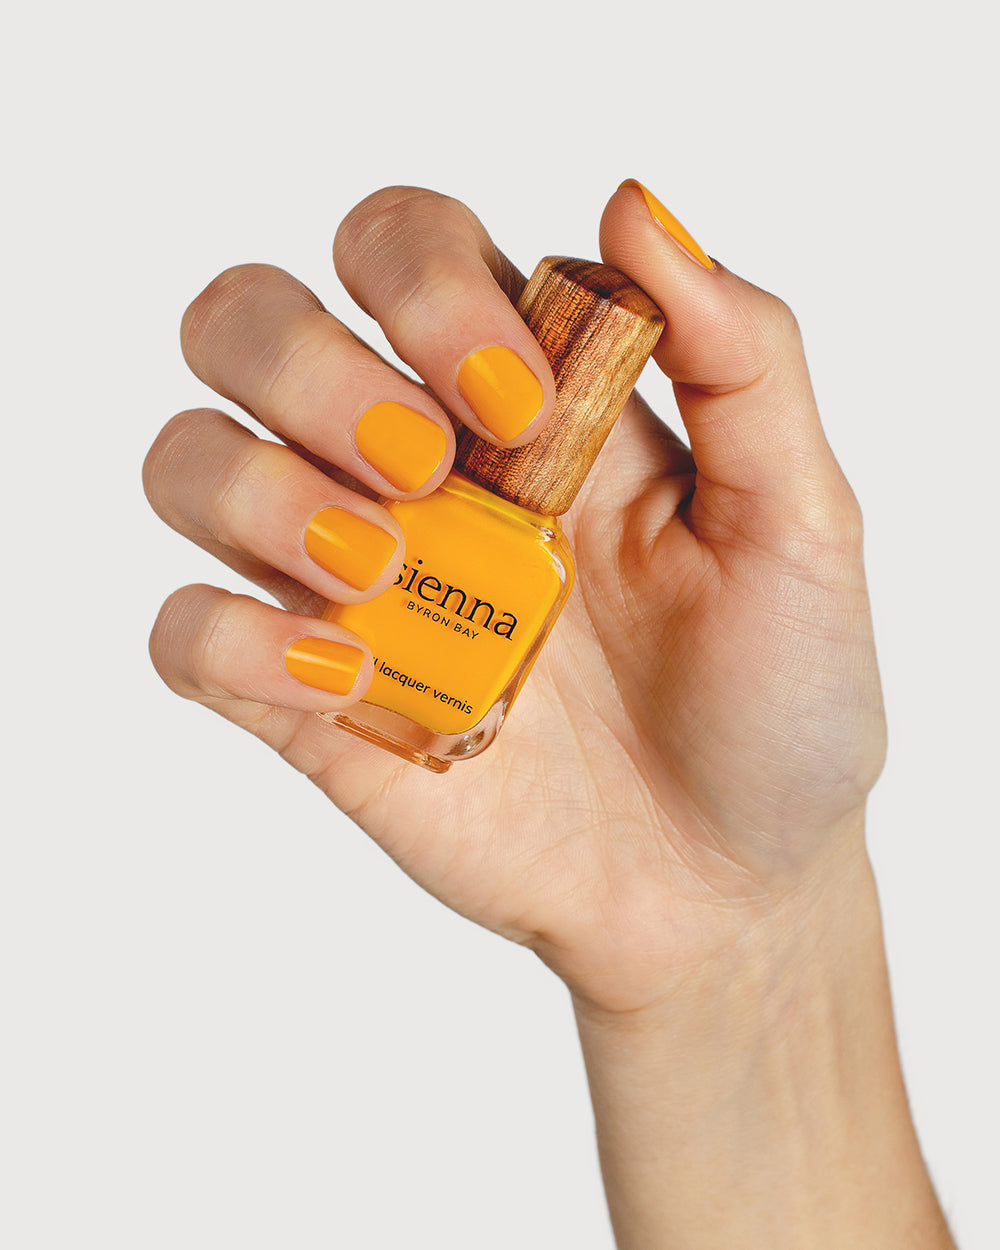 Sunflower yellow nail polish hand swatch on fair skin tone holding sienna bottle